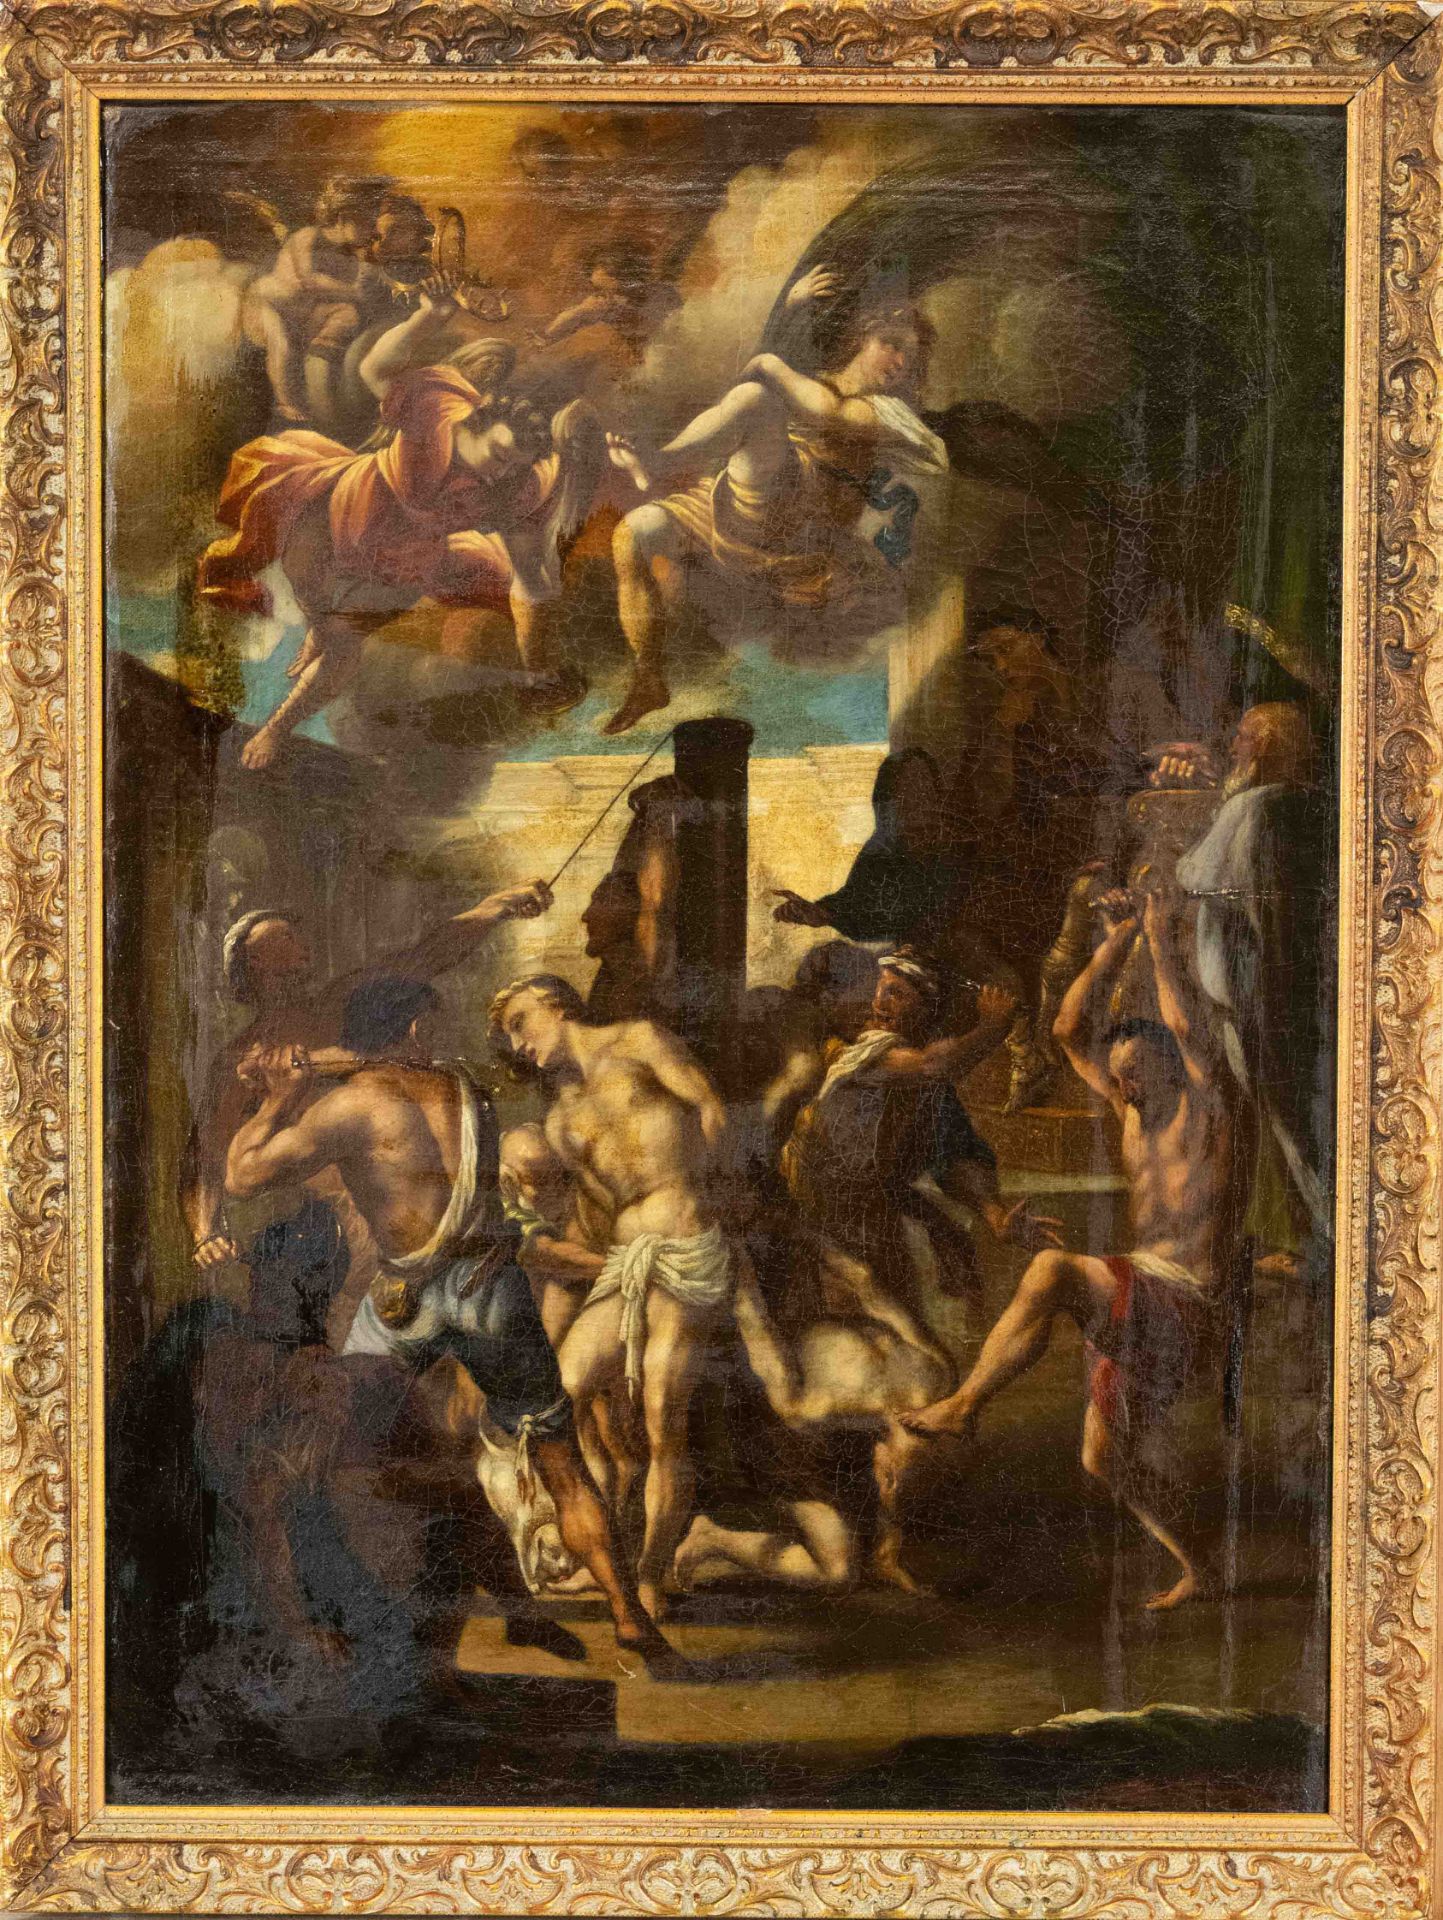 Italian Old Master 1st half 18th century, multi-figure biblical scene. Rare depiction of Christ with